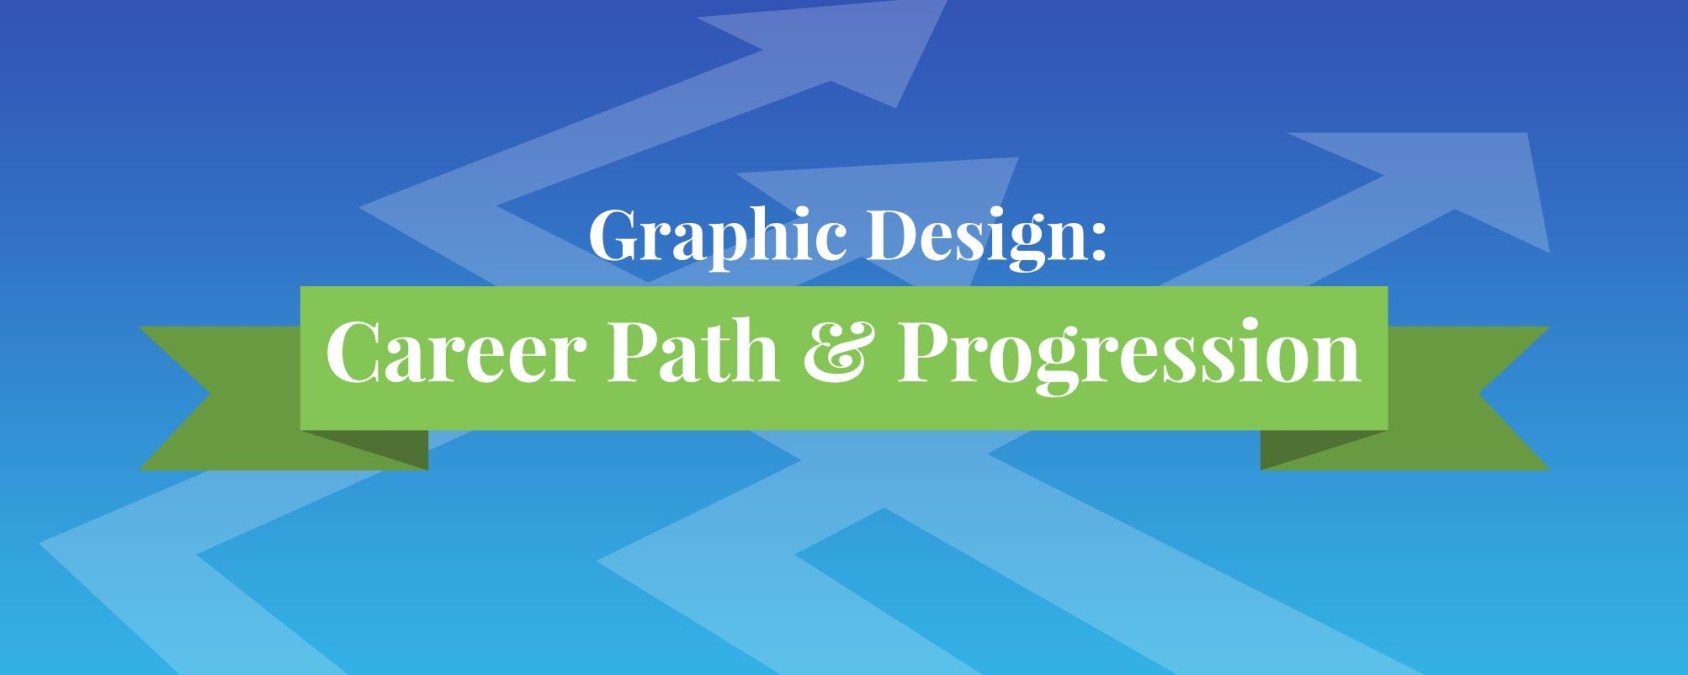 Graphic Design Career Path and Progression